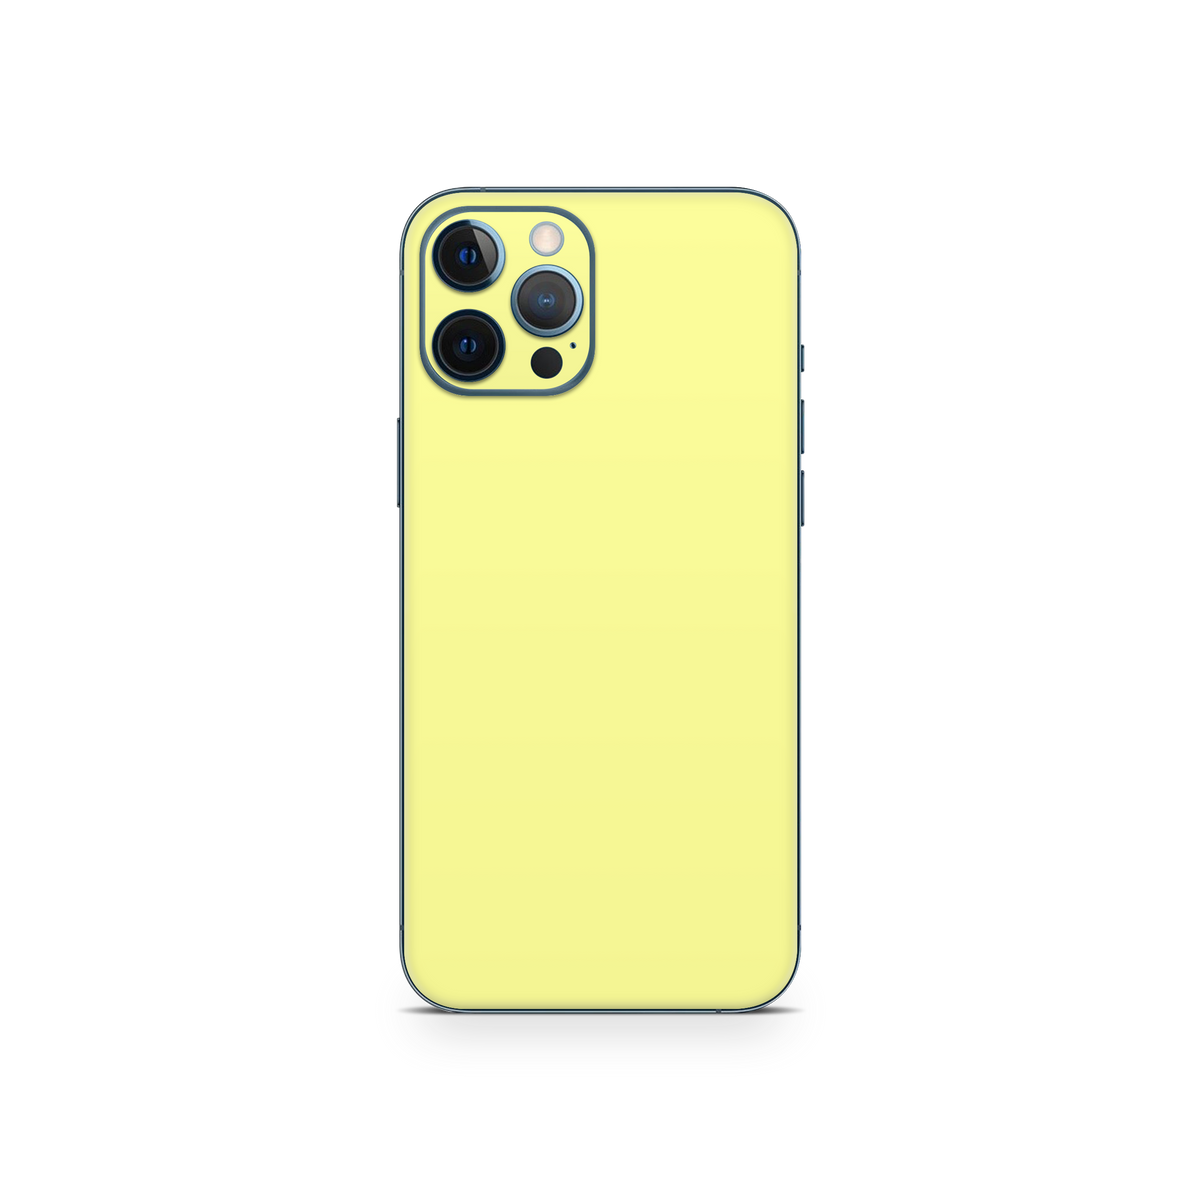 Apple iPhone 12 Pro Pale Yellow Skin